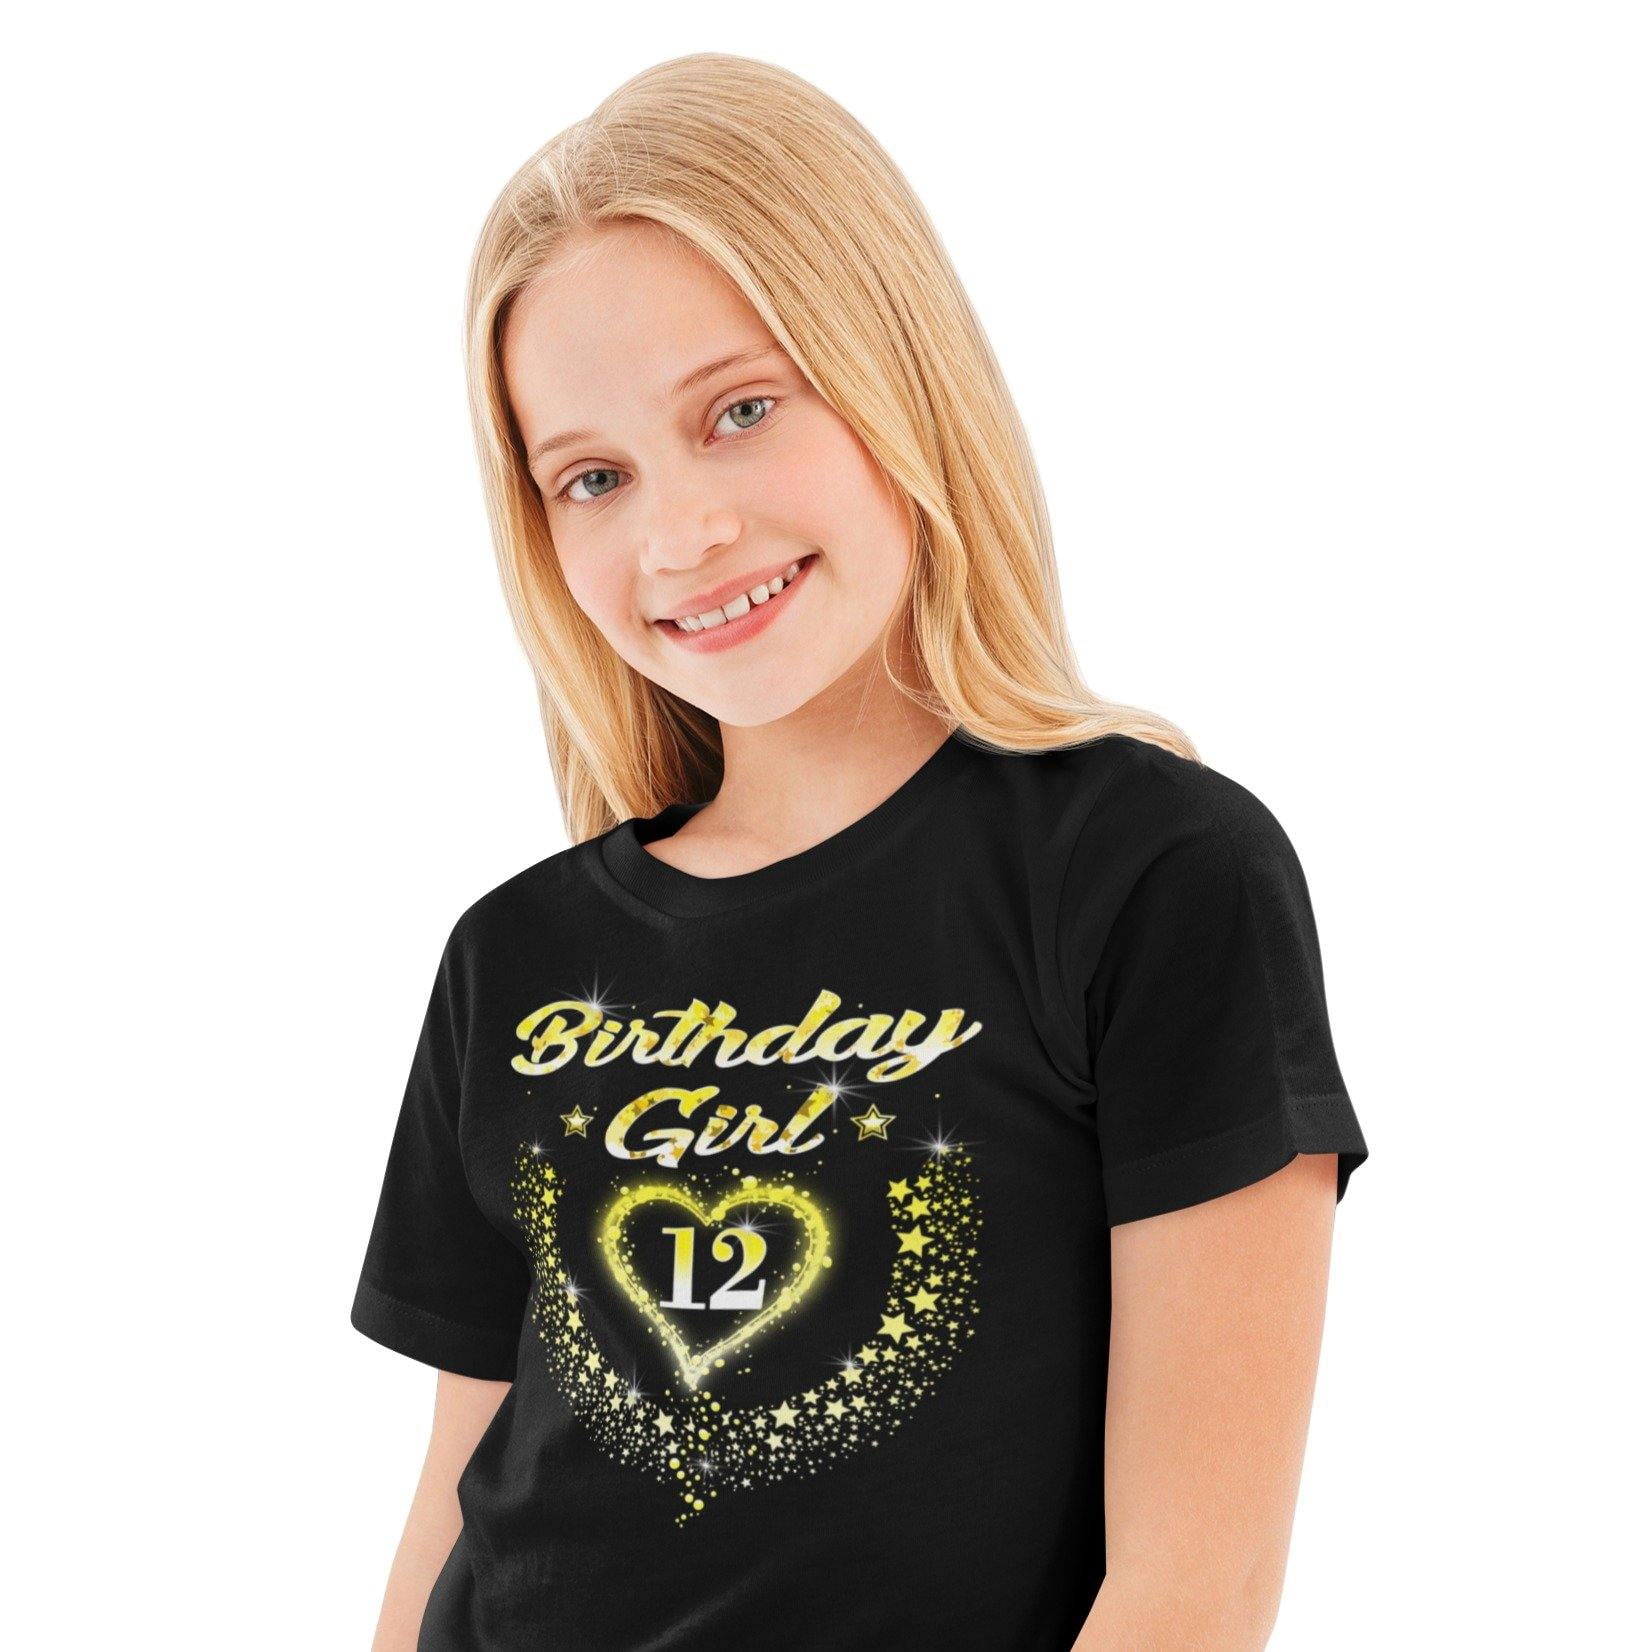 Buy April Girl 2007 Shirt 12nd Birthday Gift 12 Years Old Tee 